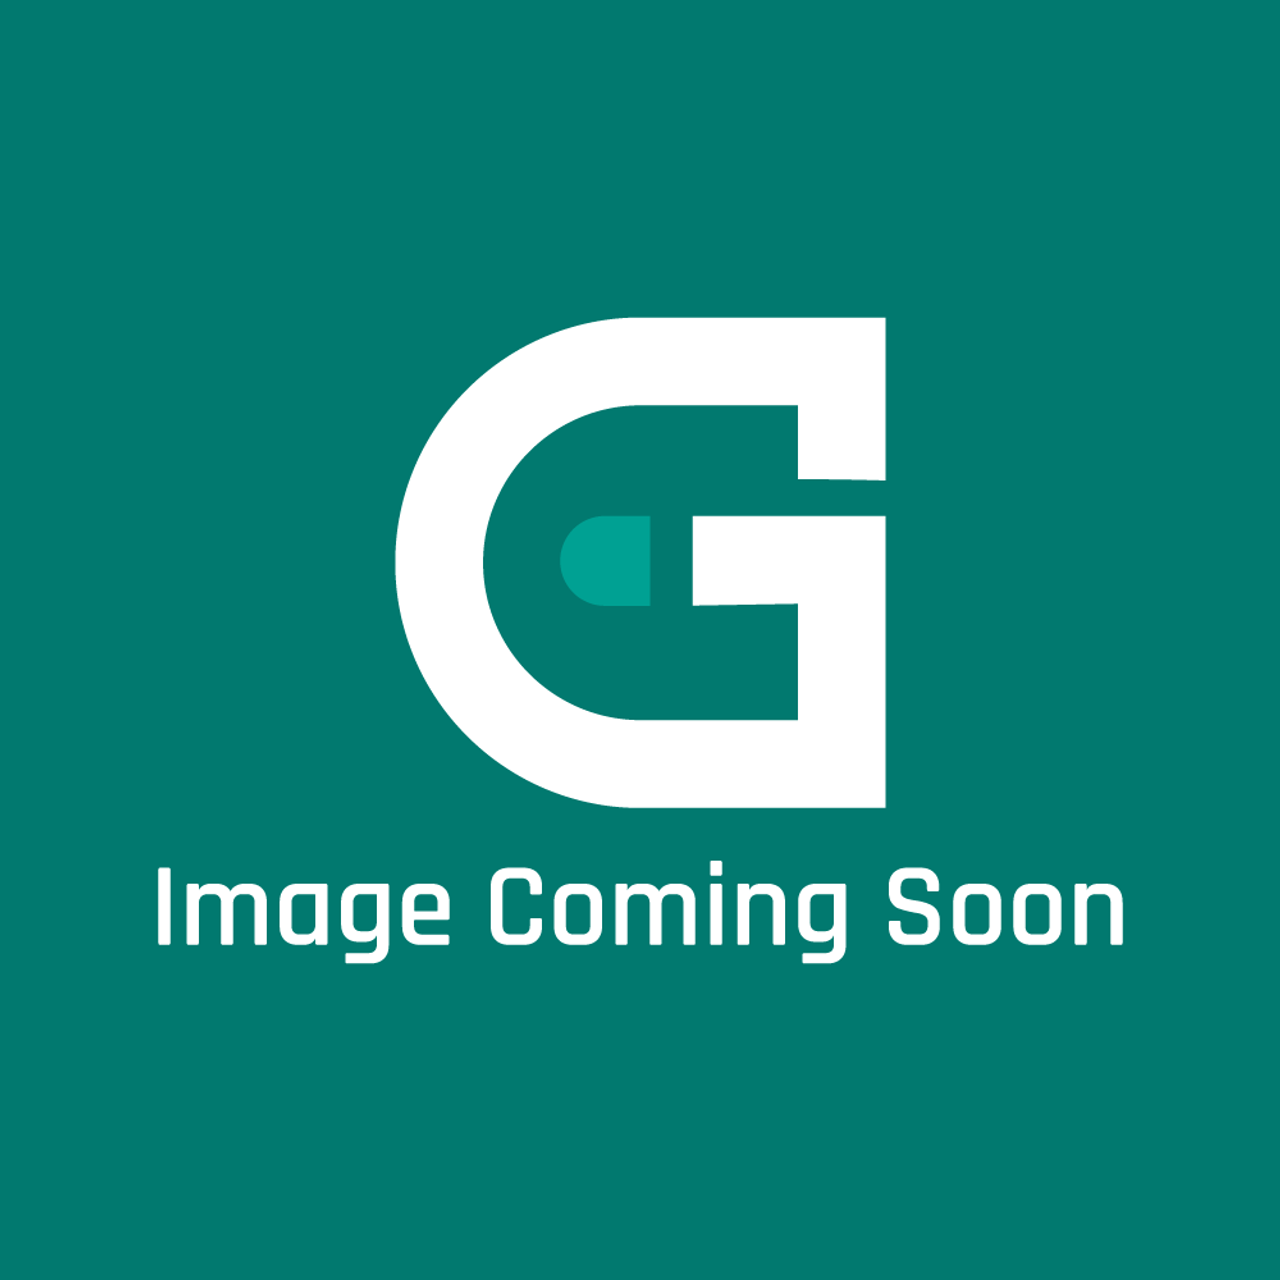 AGA Marvel AG5E210080  AUB - Mini Aga Front Plate (10Cm X 10Cm) A - Image Coming Soon!